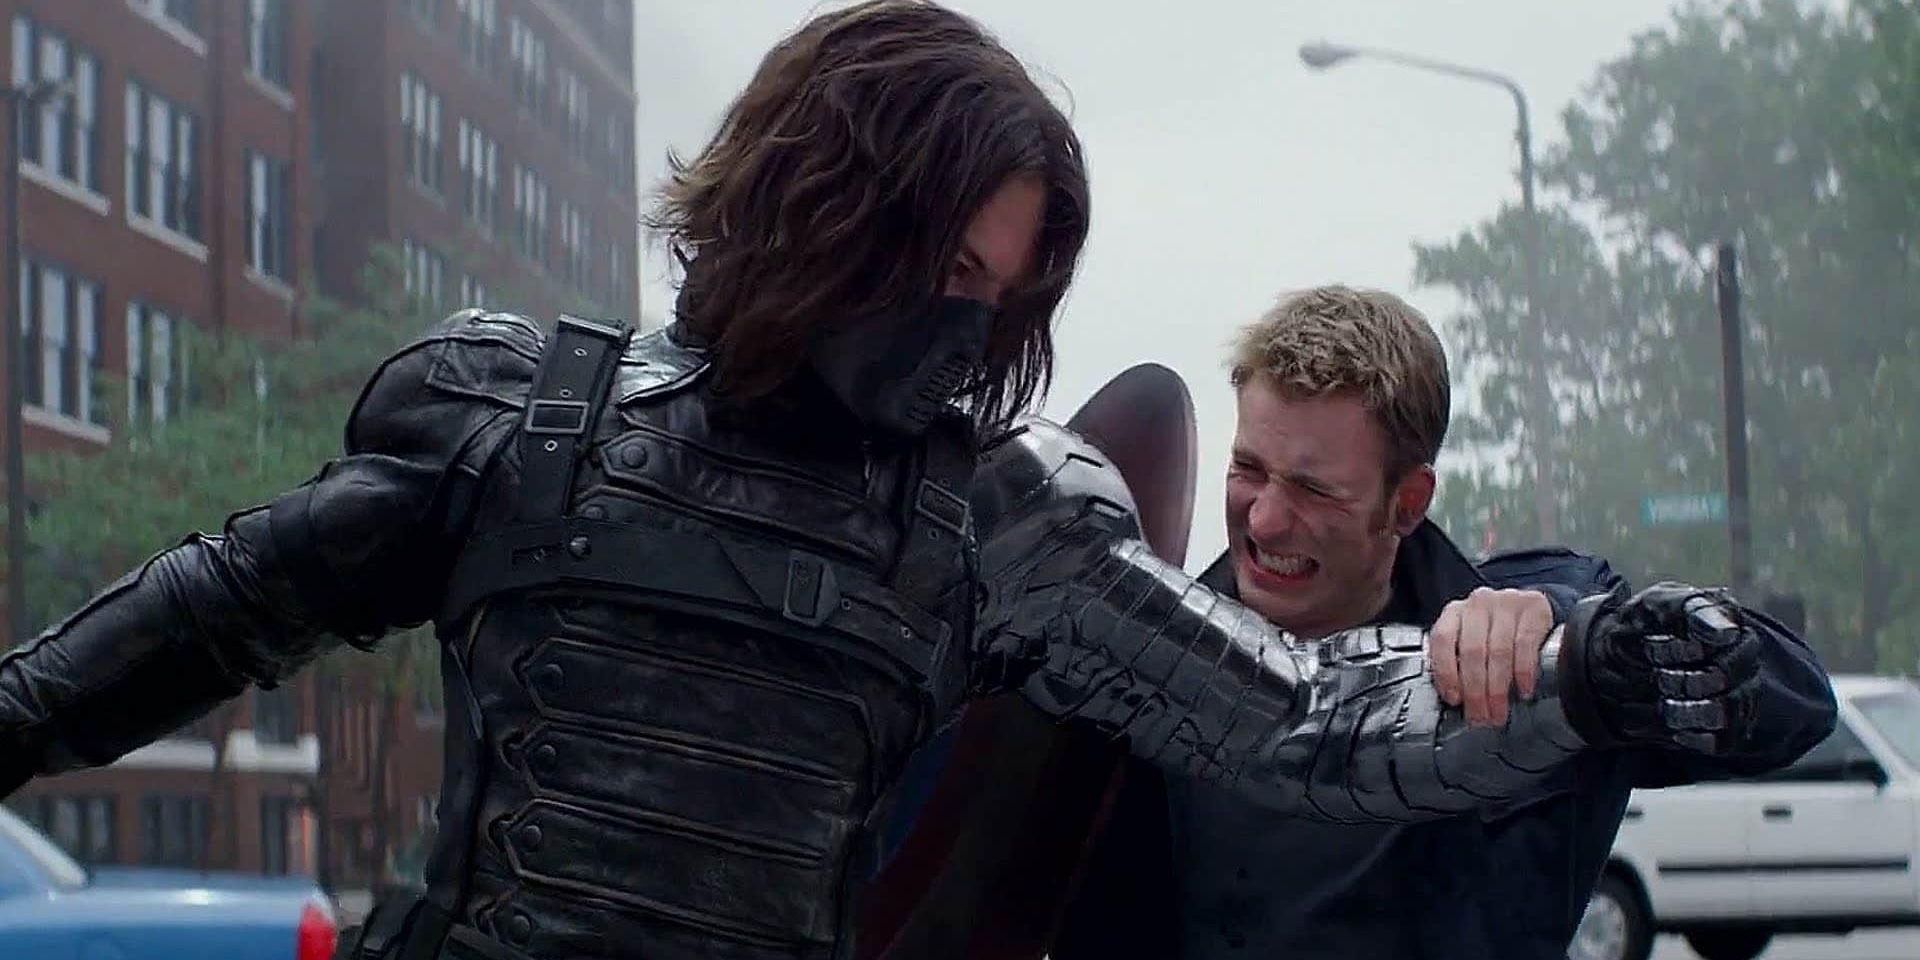 Captain America vs. Winter Soldier, highway fight scene in The Winter Soldier